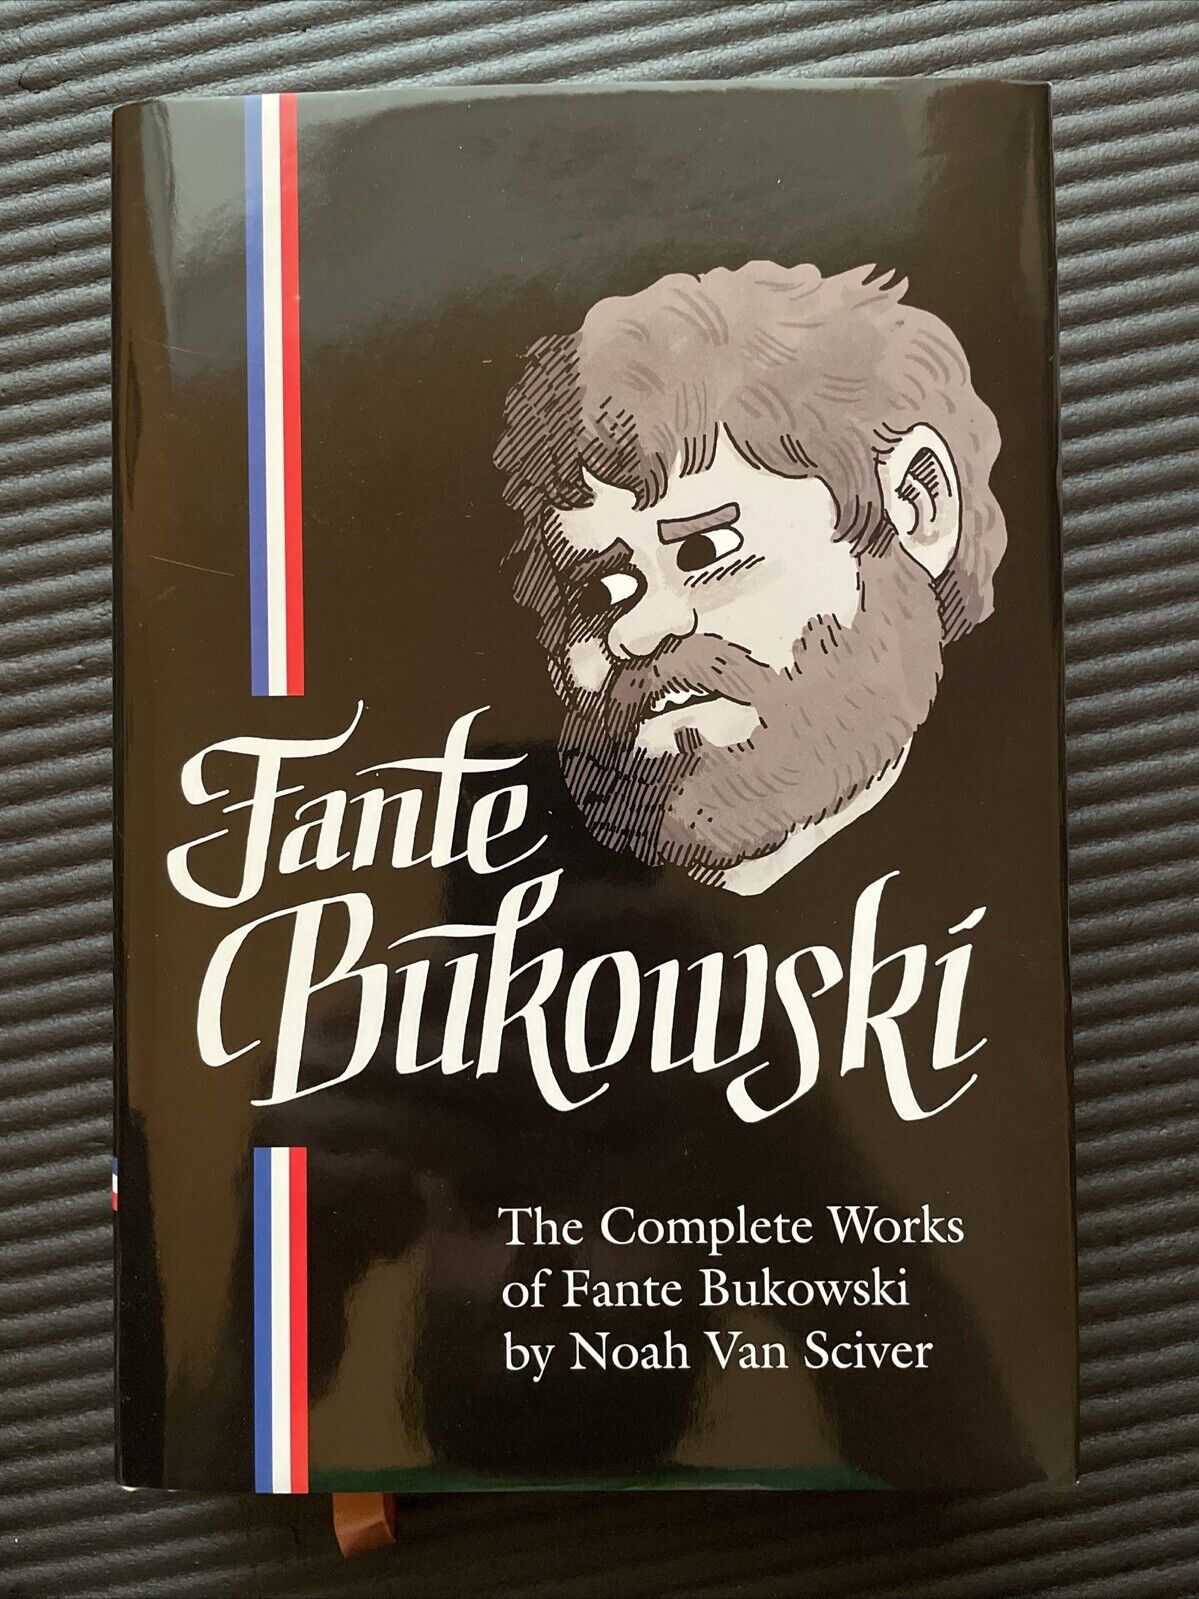 The Complete Works of Fante Bukowski (Fantagraphics Books 2020)